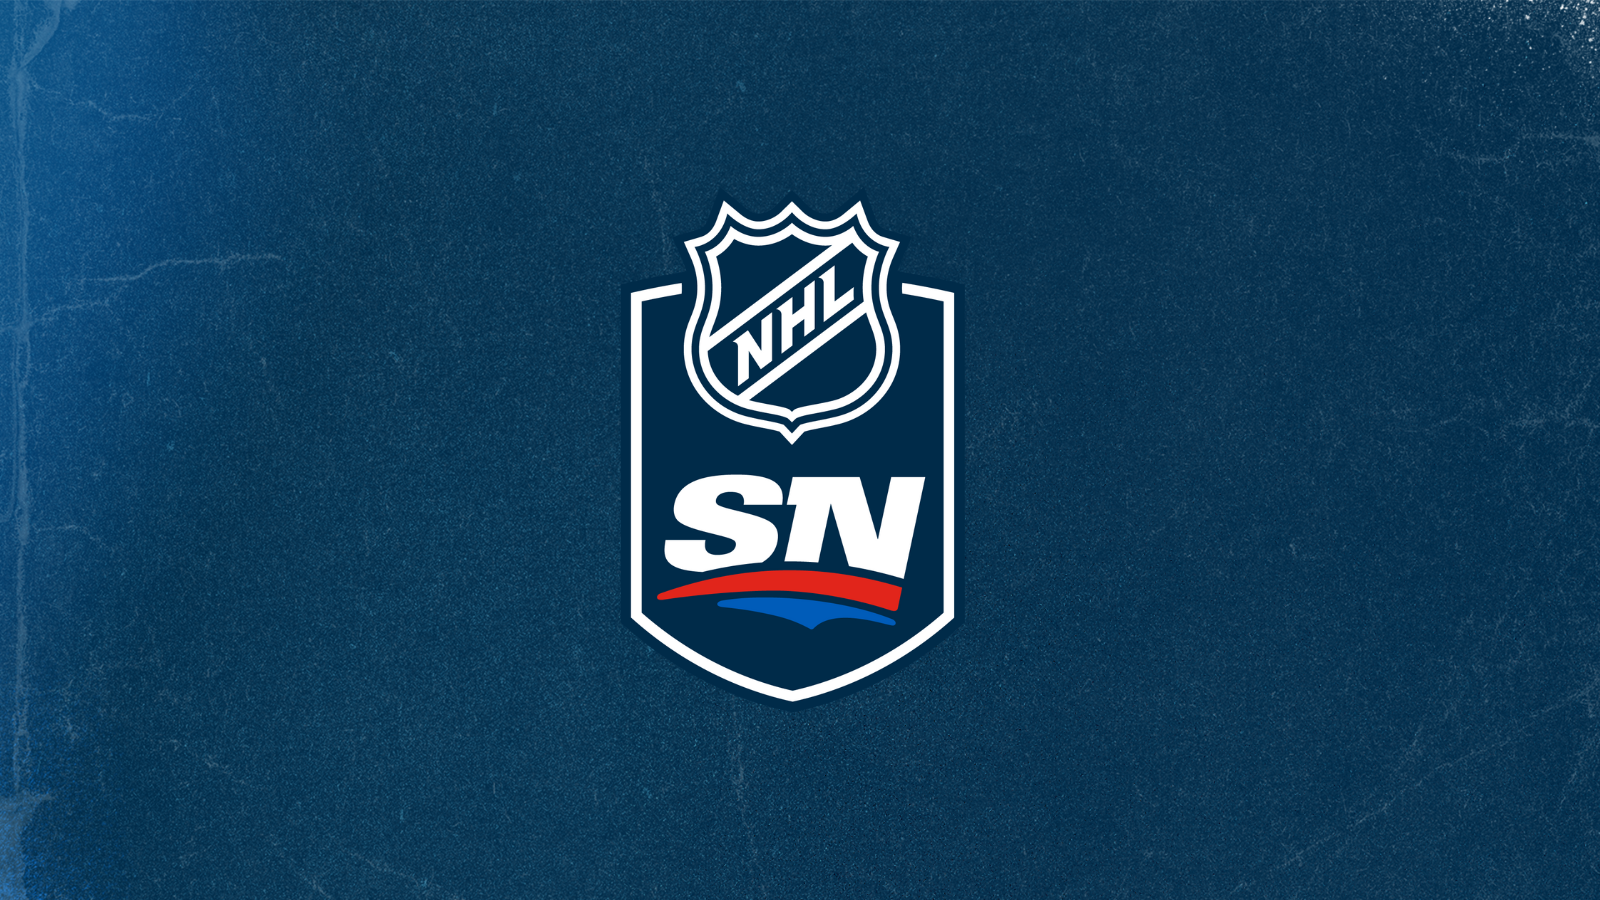 Sport24 renews NHL deal